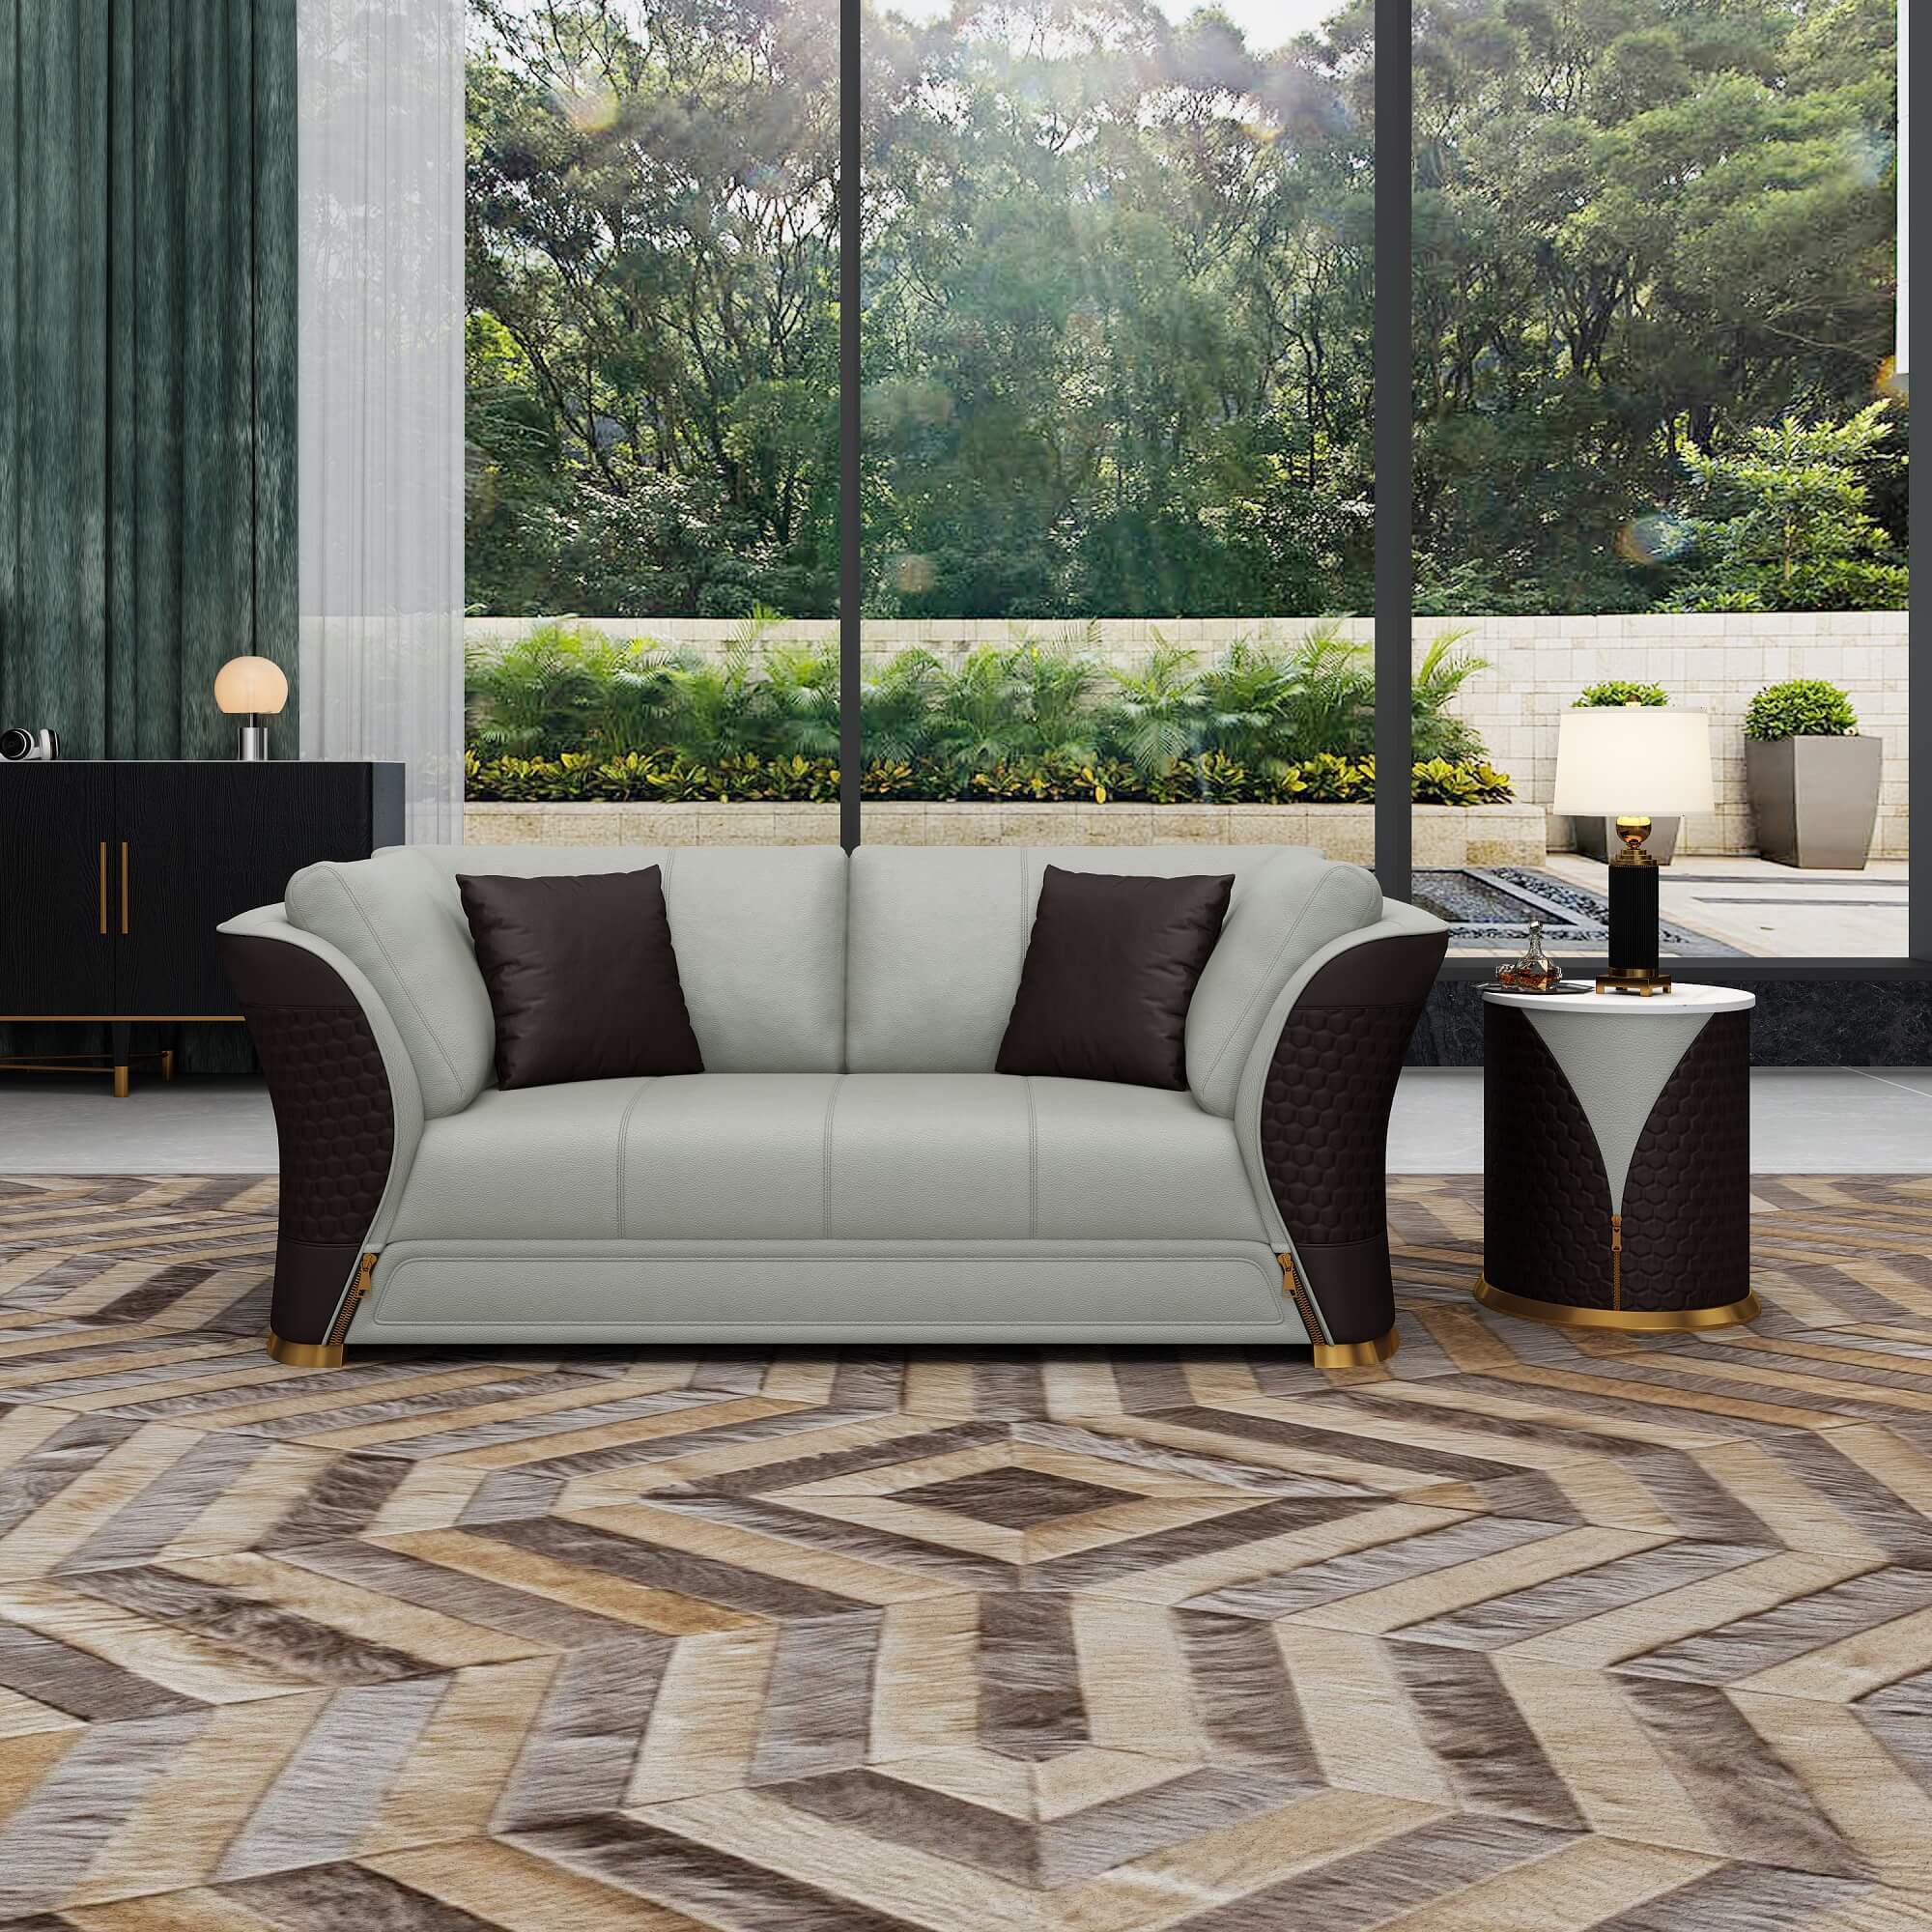 European Furniture - Vogue Loveseat Grey & Chocolate Italian Leather - EF-27993-L - New Star Living